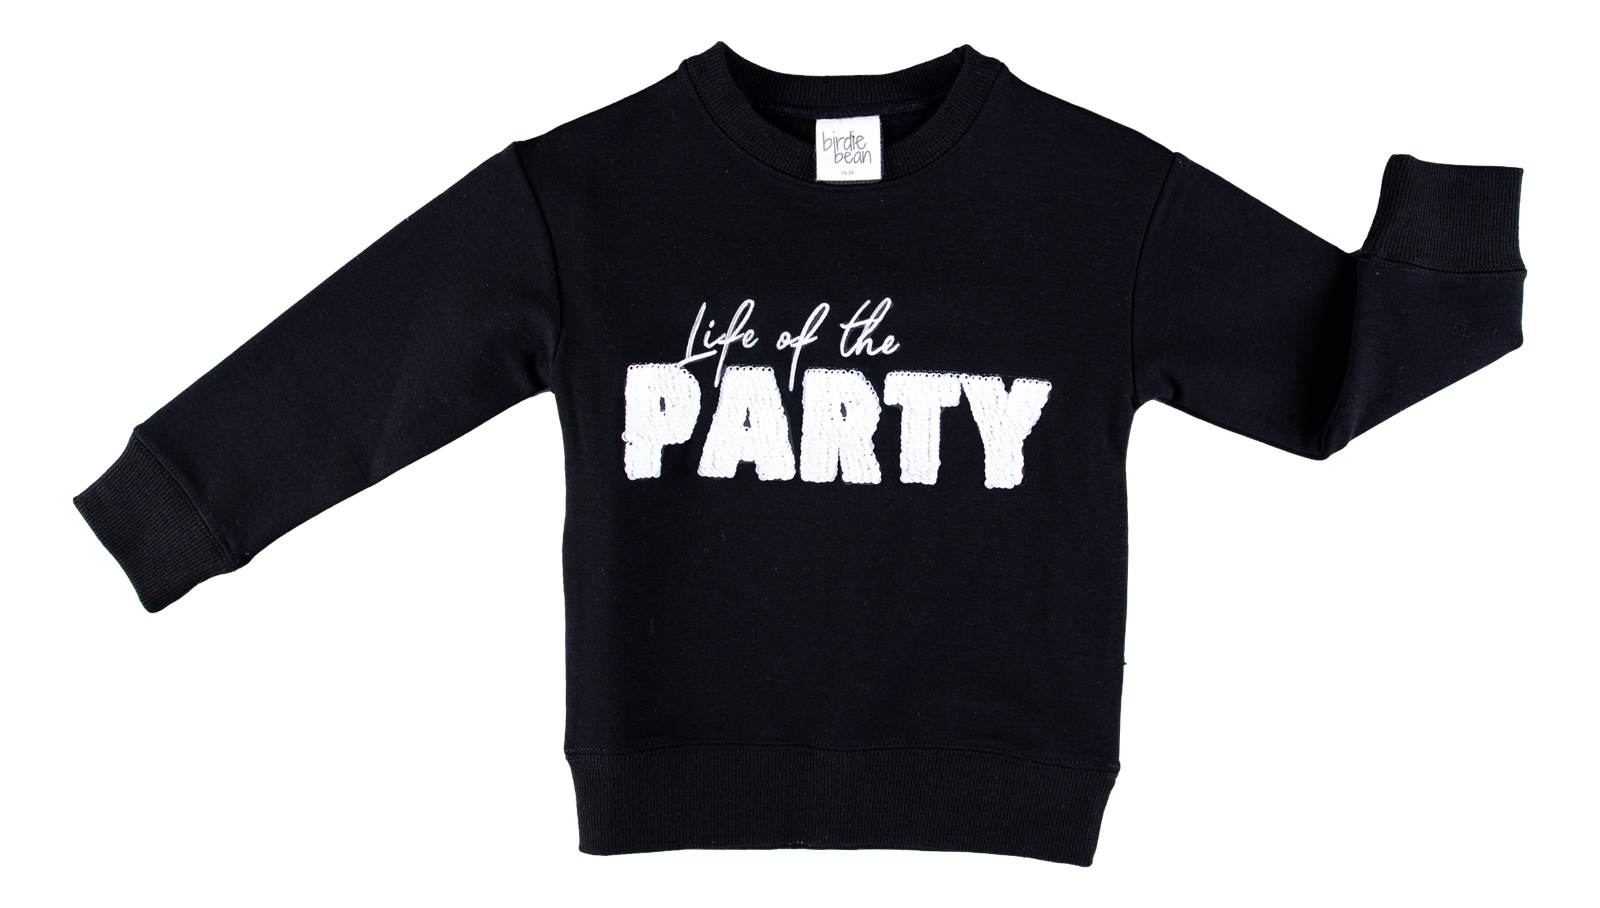 Birdie Bean Embroidered Sequin Crewneck Sweatshirt - Life of the Party (Final Sale)